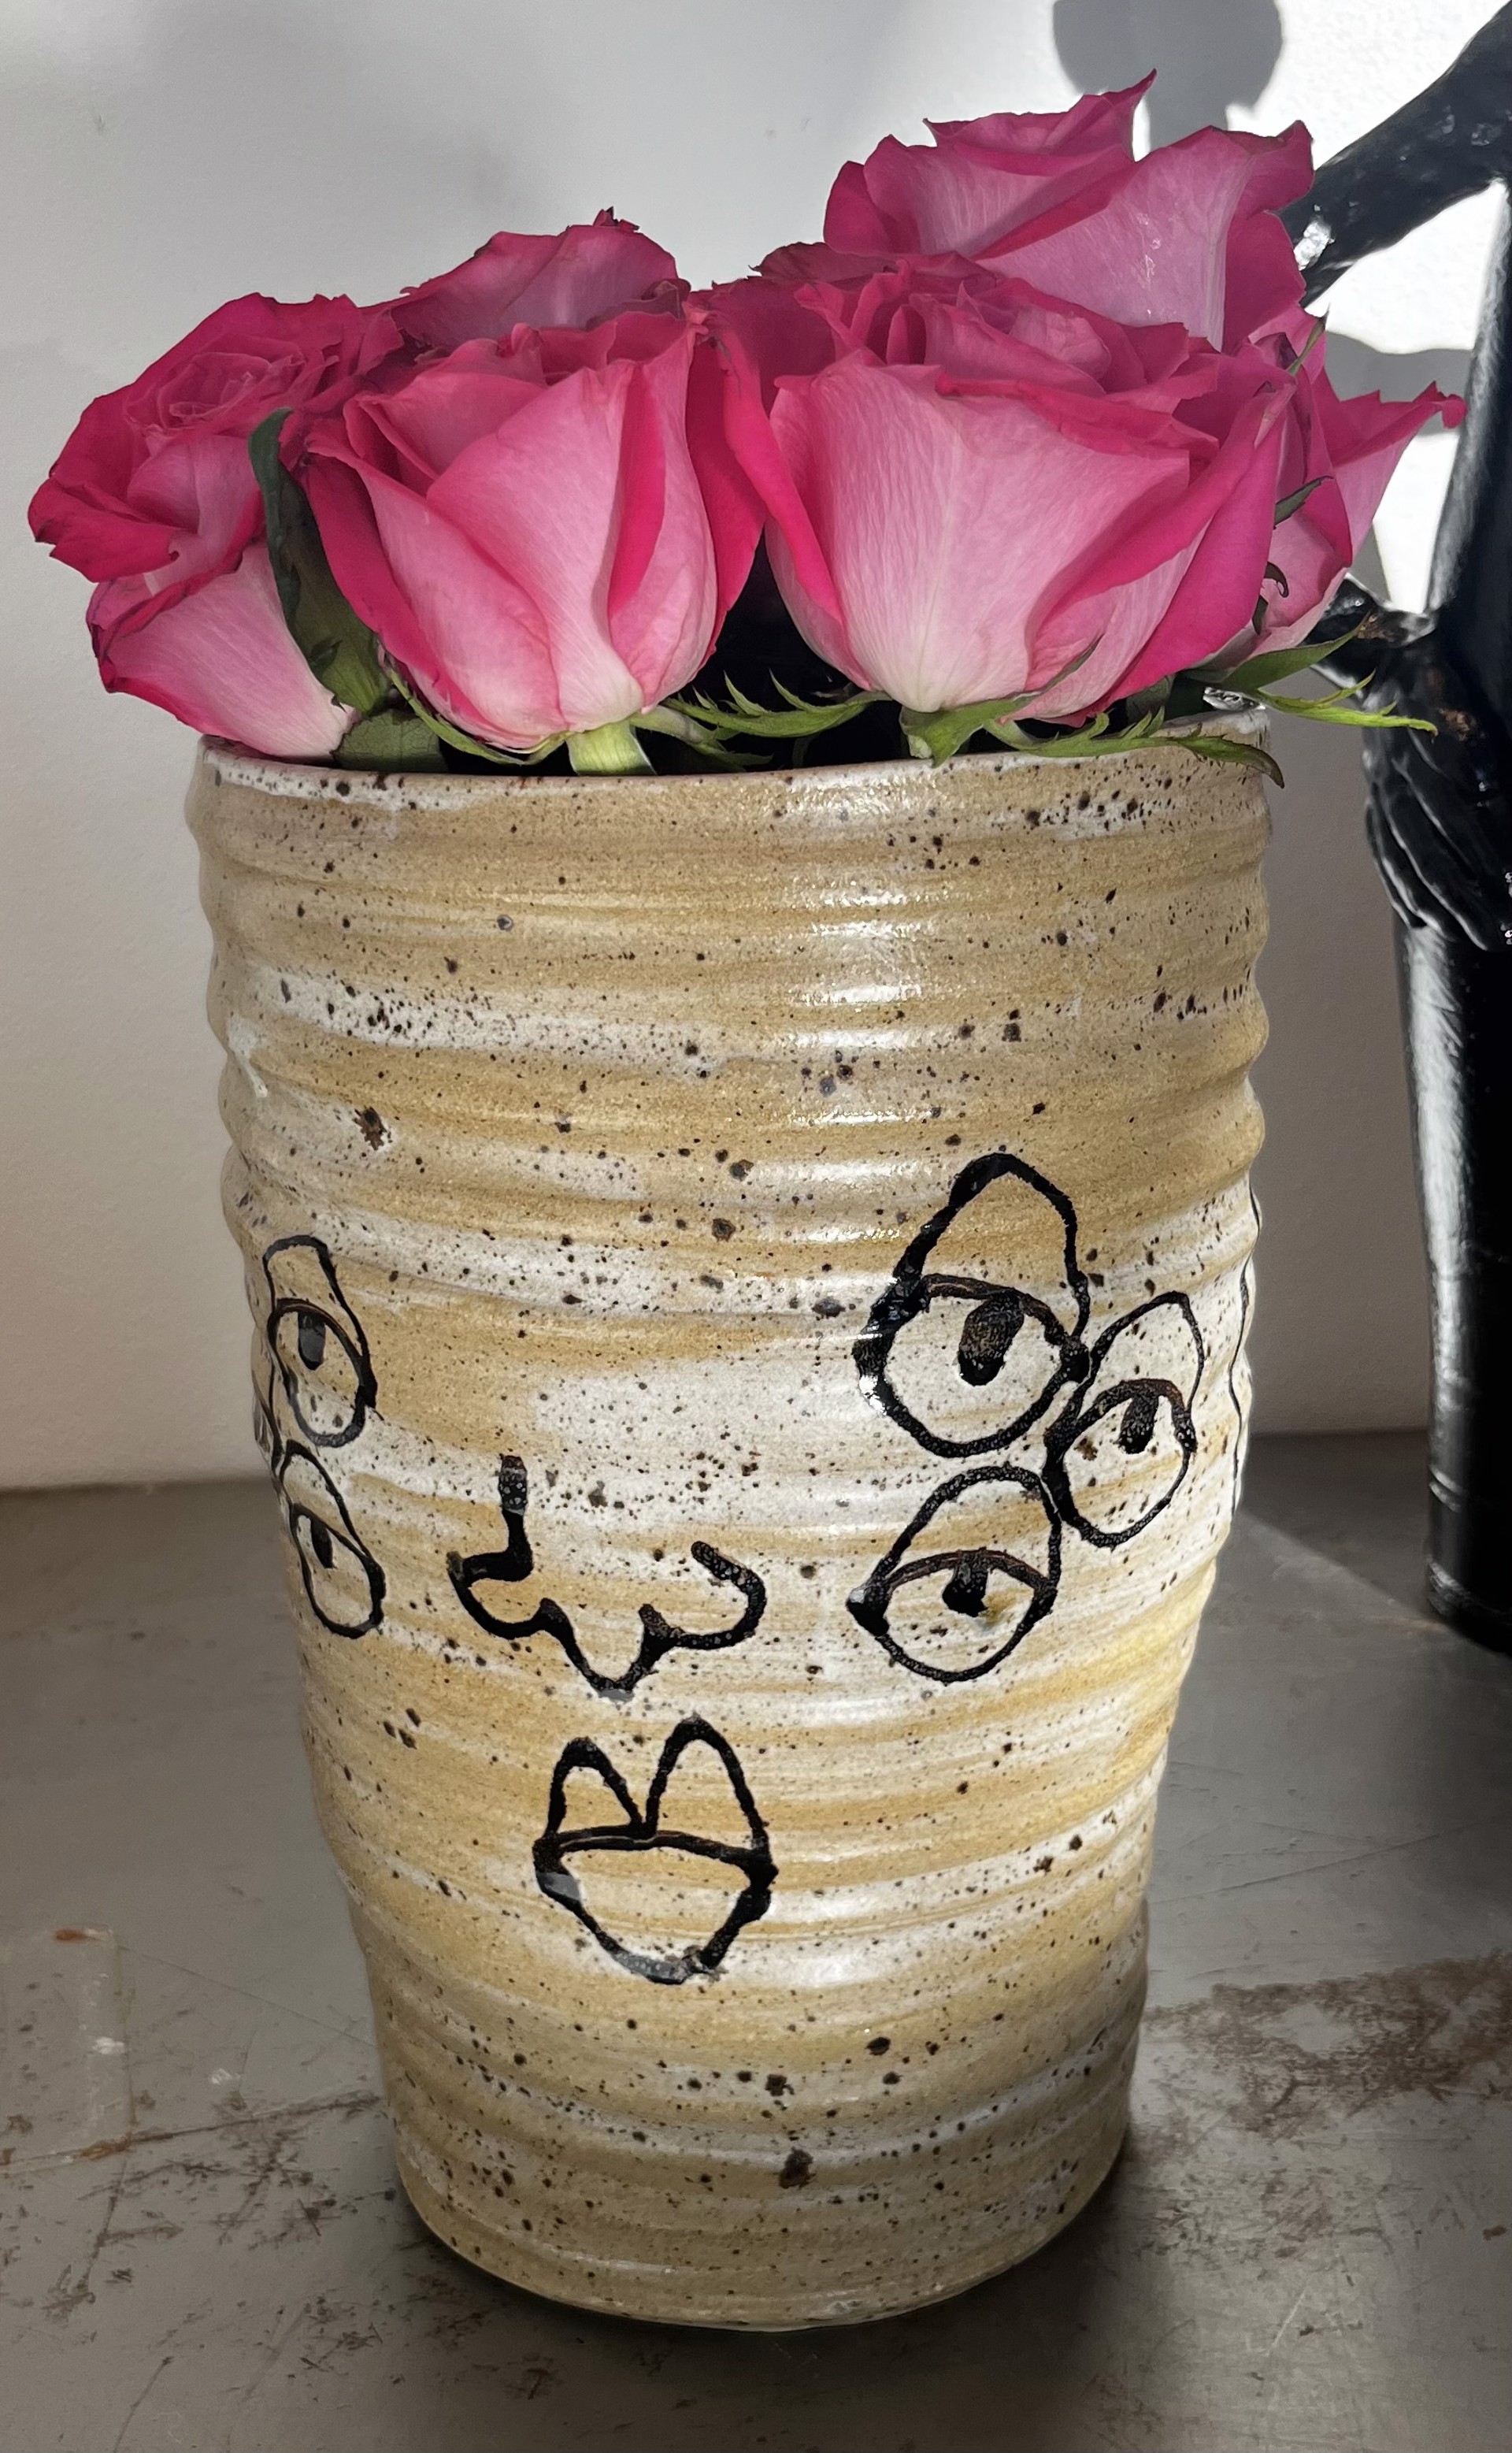 ET Vase 3 by Sarah Hummel Jones